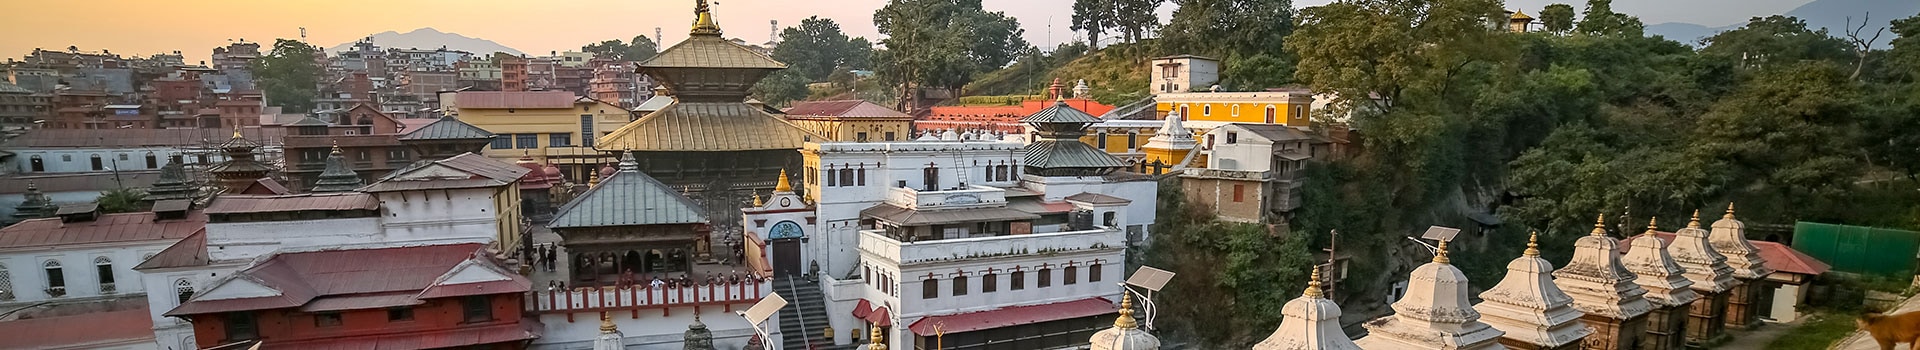 Katmandou - tribhuvan intl